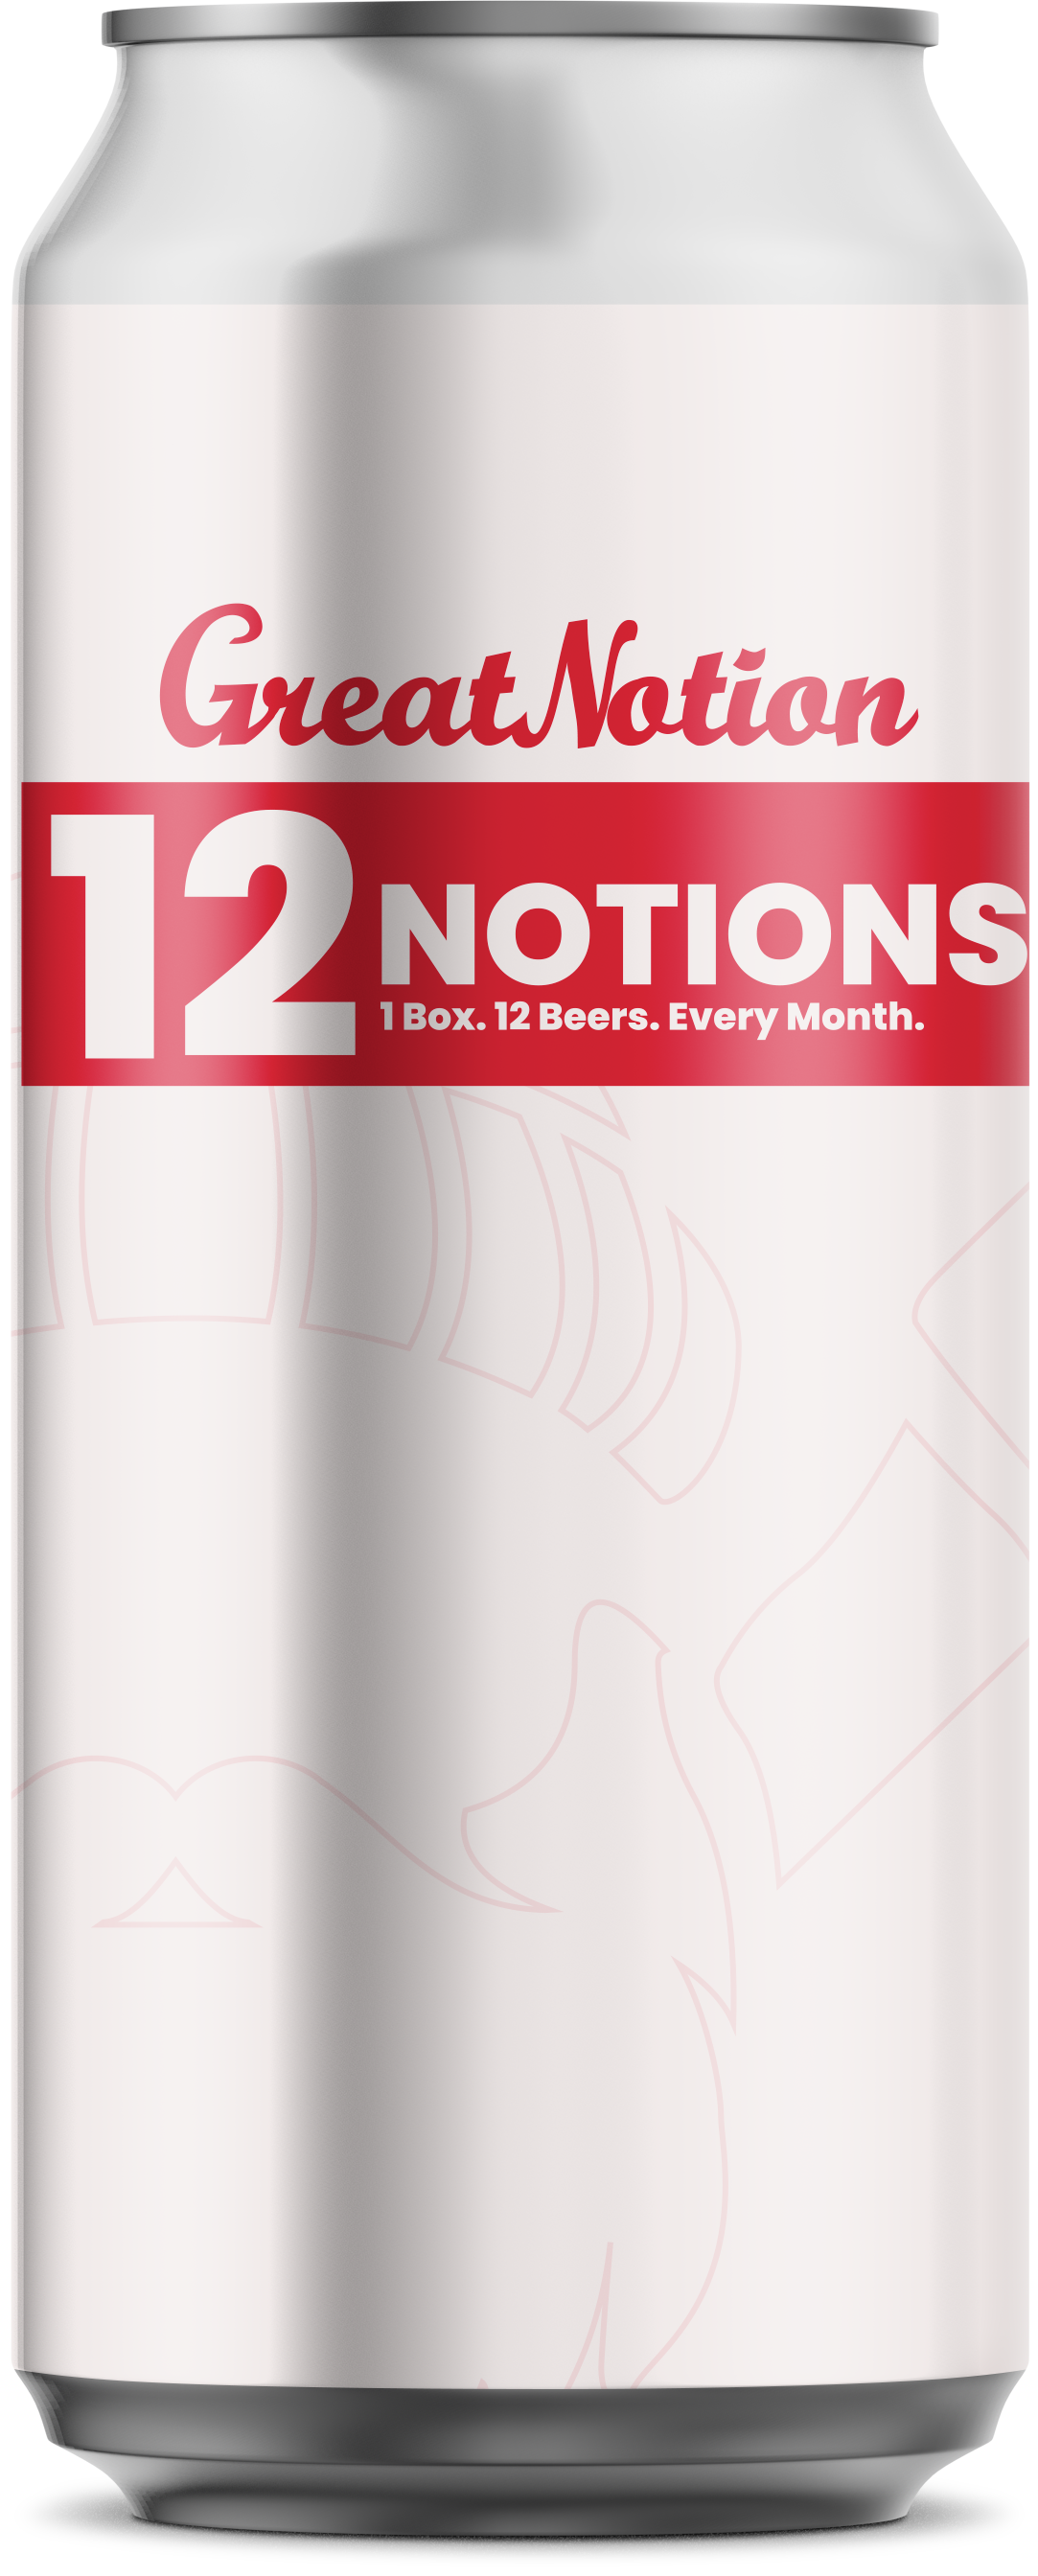 12 Notions - May